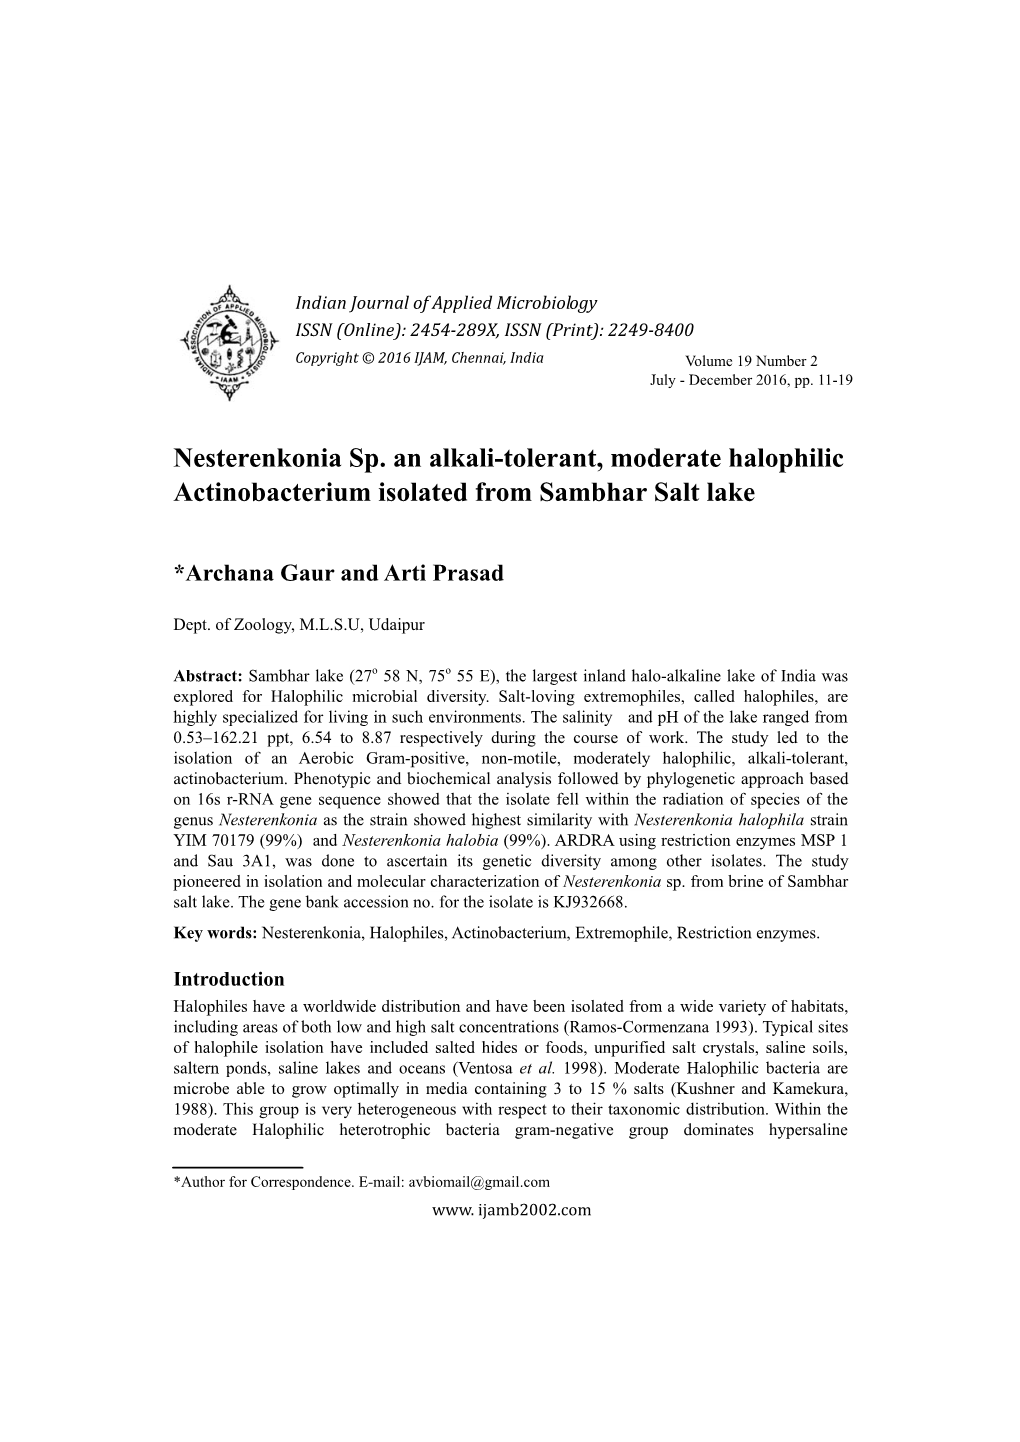 Nesterenkonia Sp. an Alkali-Tolerant, Moderate Halophilic Actinobacterium Isolated from Sambhar Salt Lake